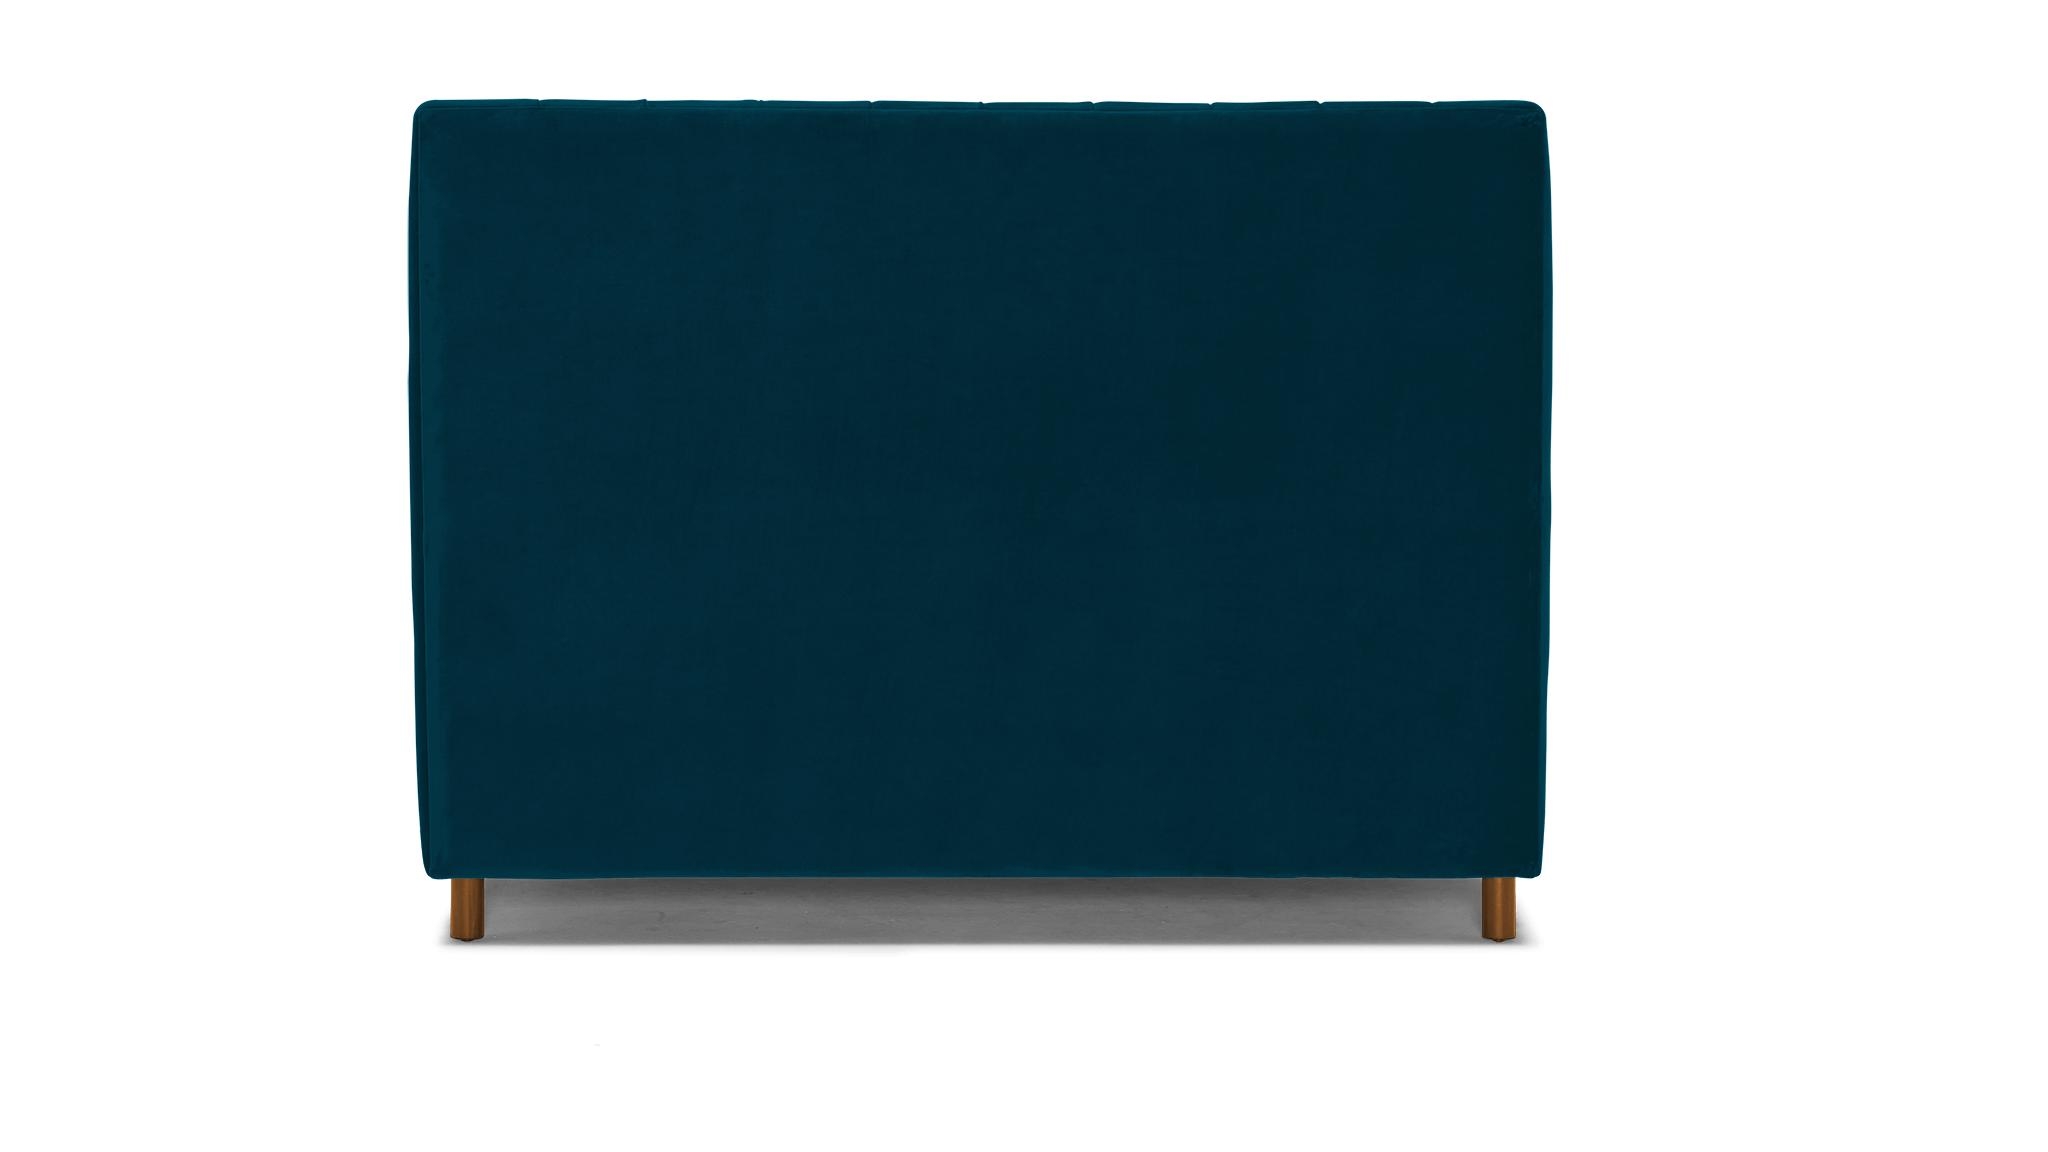 Blue Lotta Mid Century Modern Bed - Key Largo Zenith Teal - Mocha - Eastern King - Image 4